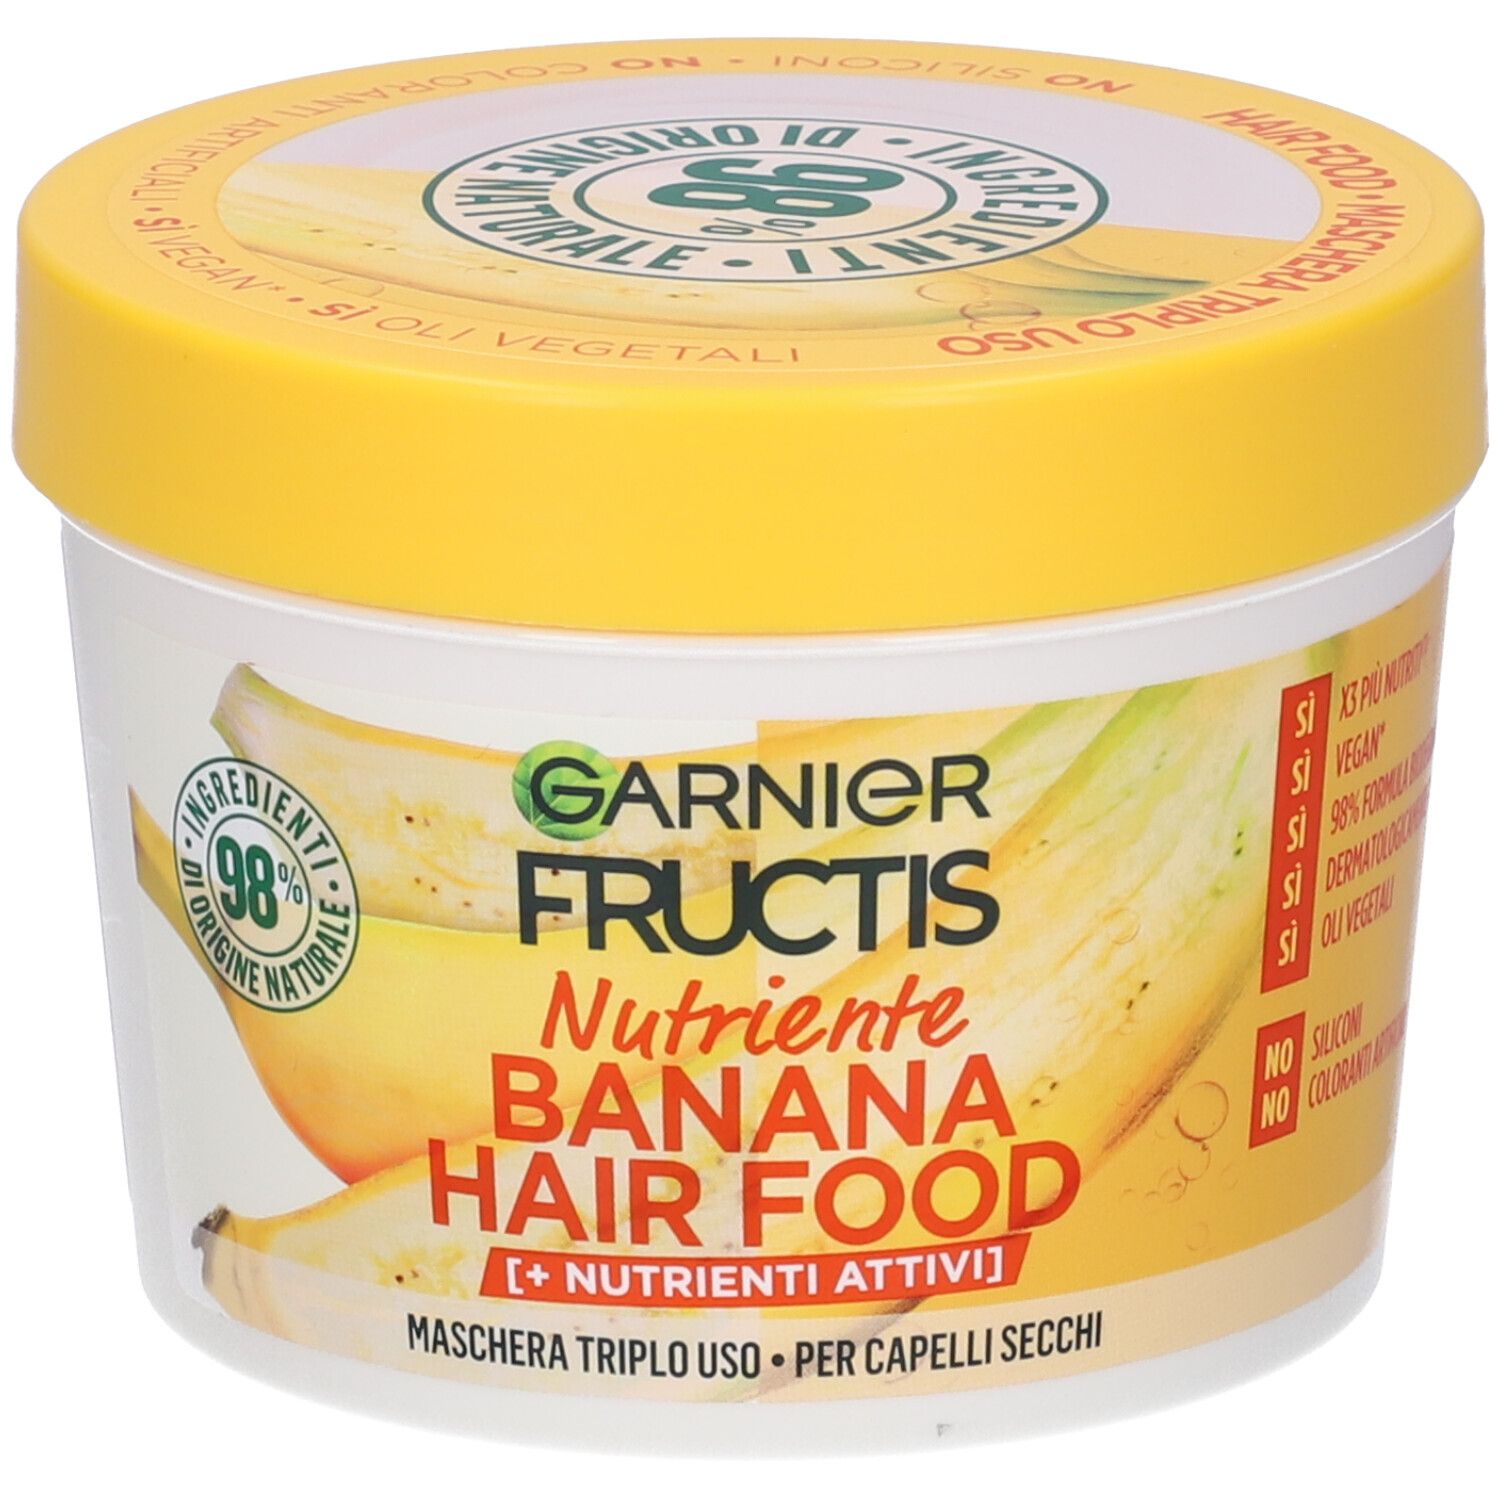 Image of Garnier Maschera Nutriente Fructis Hair Food, Maschera disciplinante 3in1 con formula vegana per capelli secchi, Banana, 390 ml